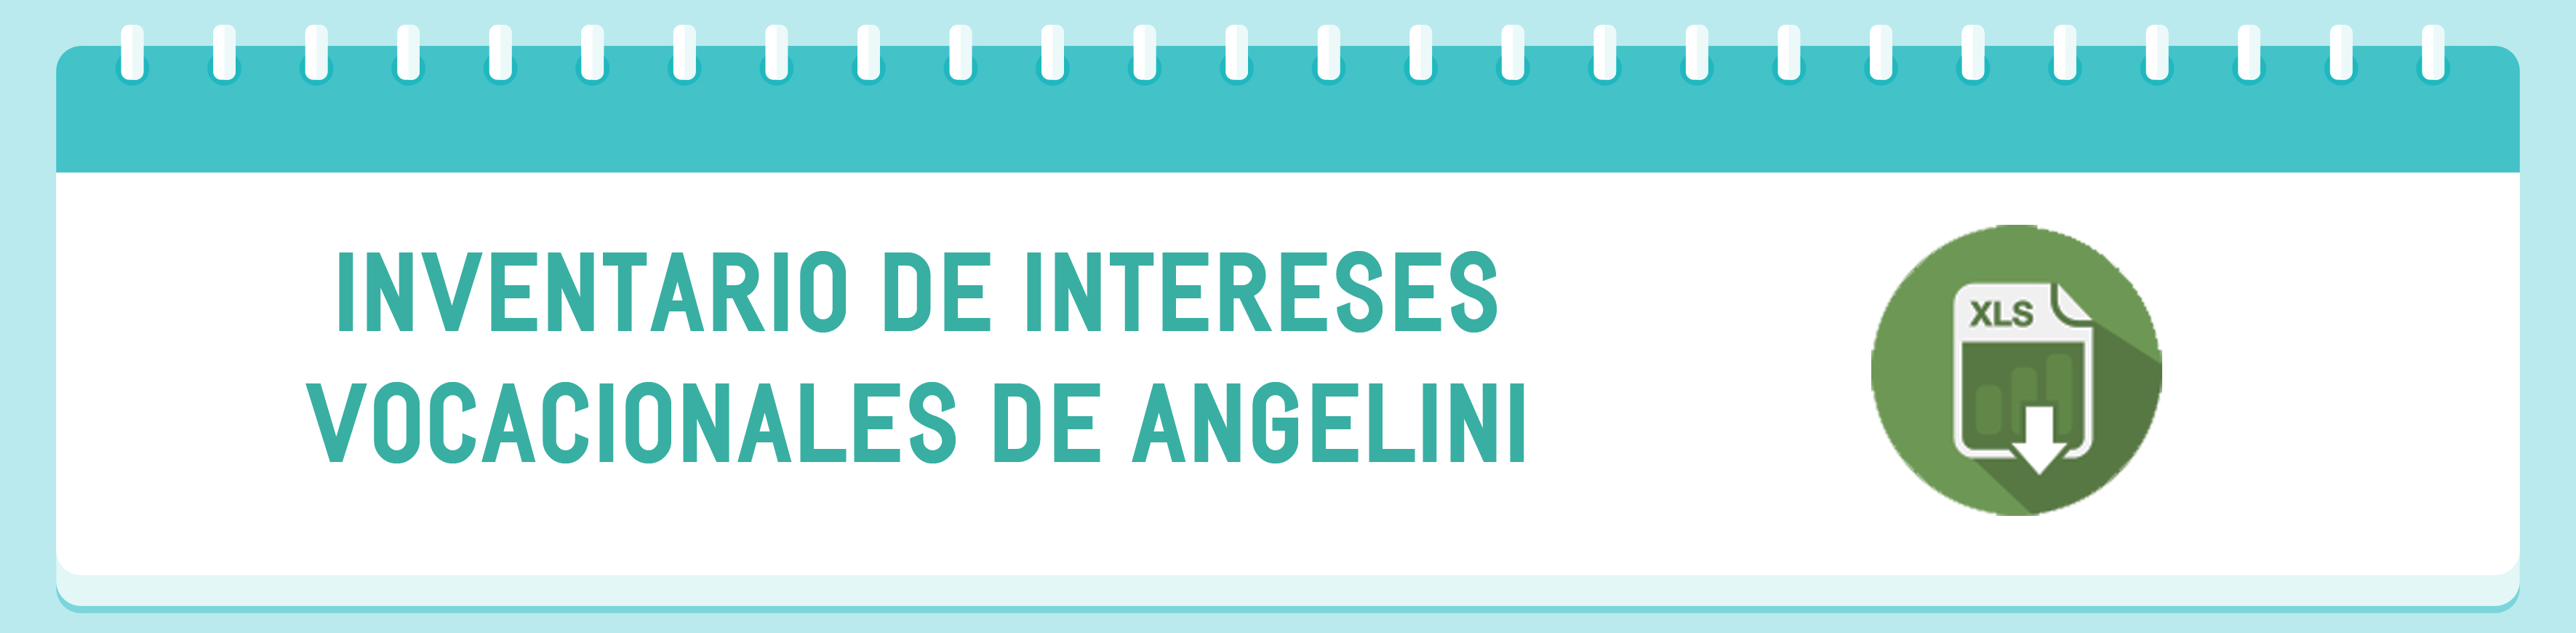 inventario_intereses_vocacionales_angelini_xls.png